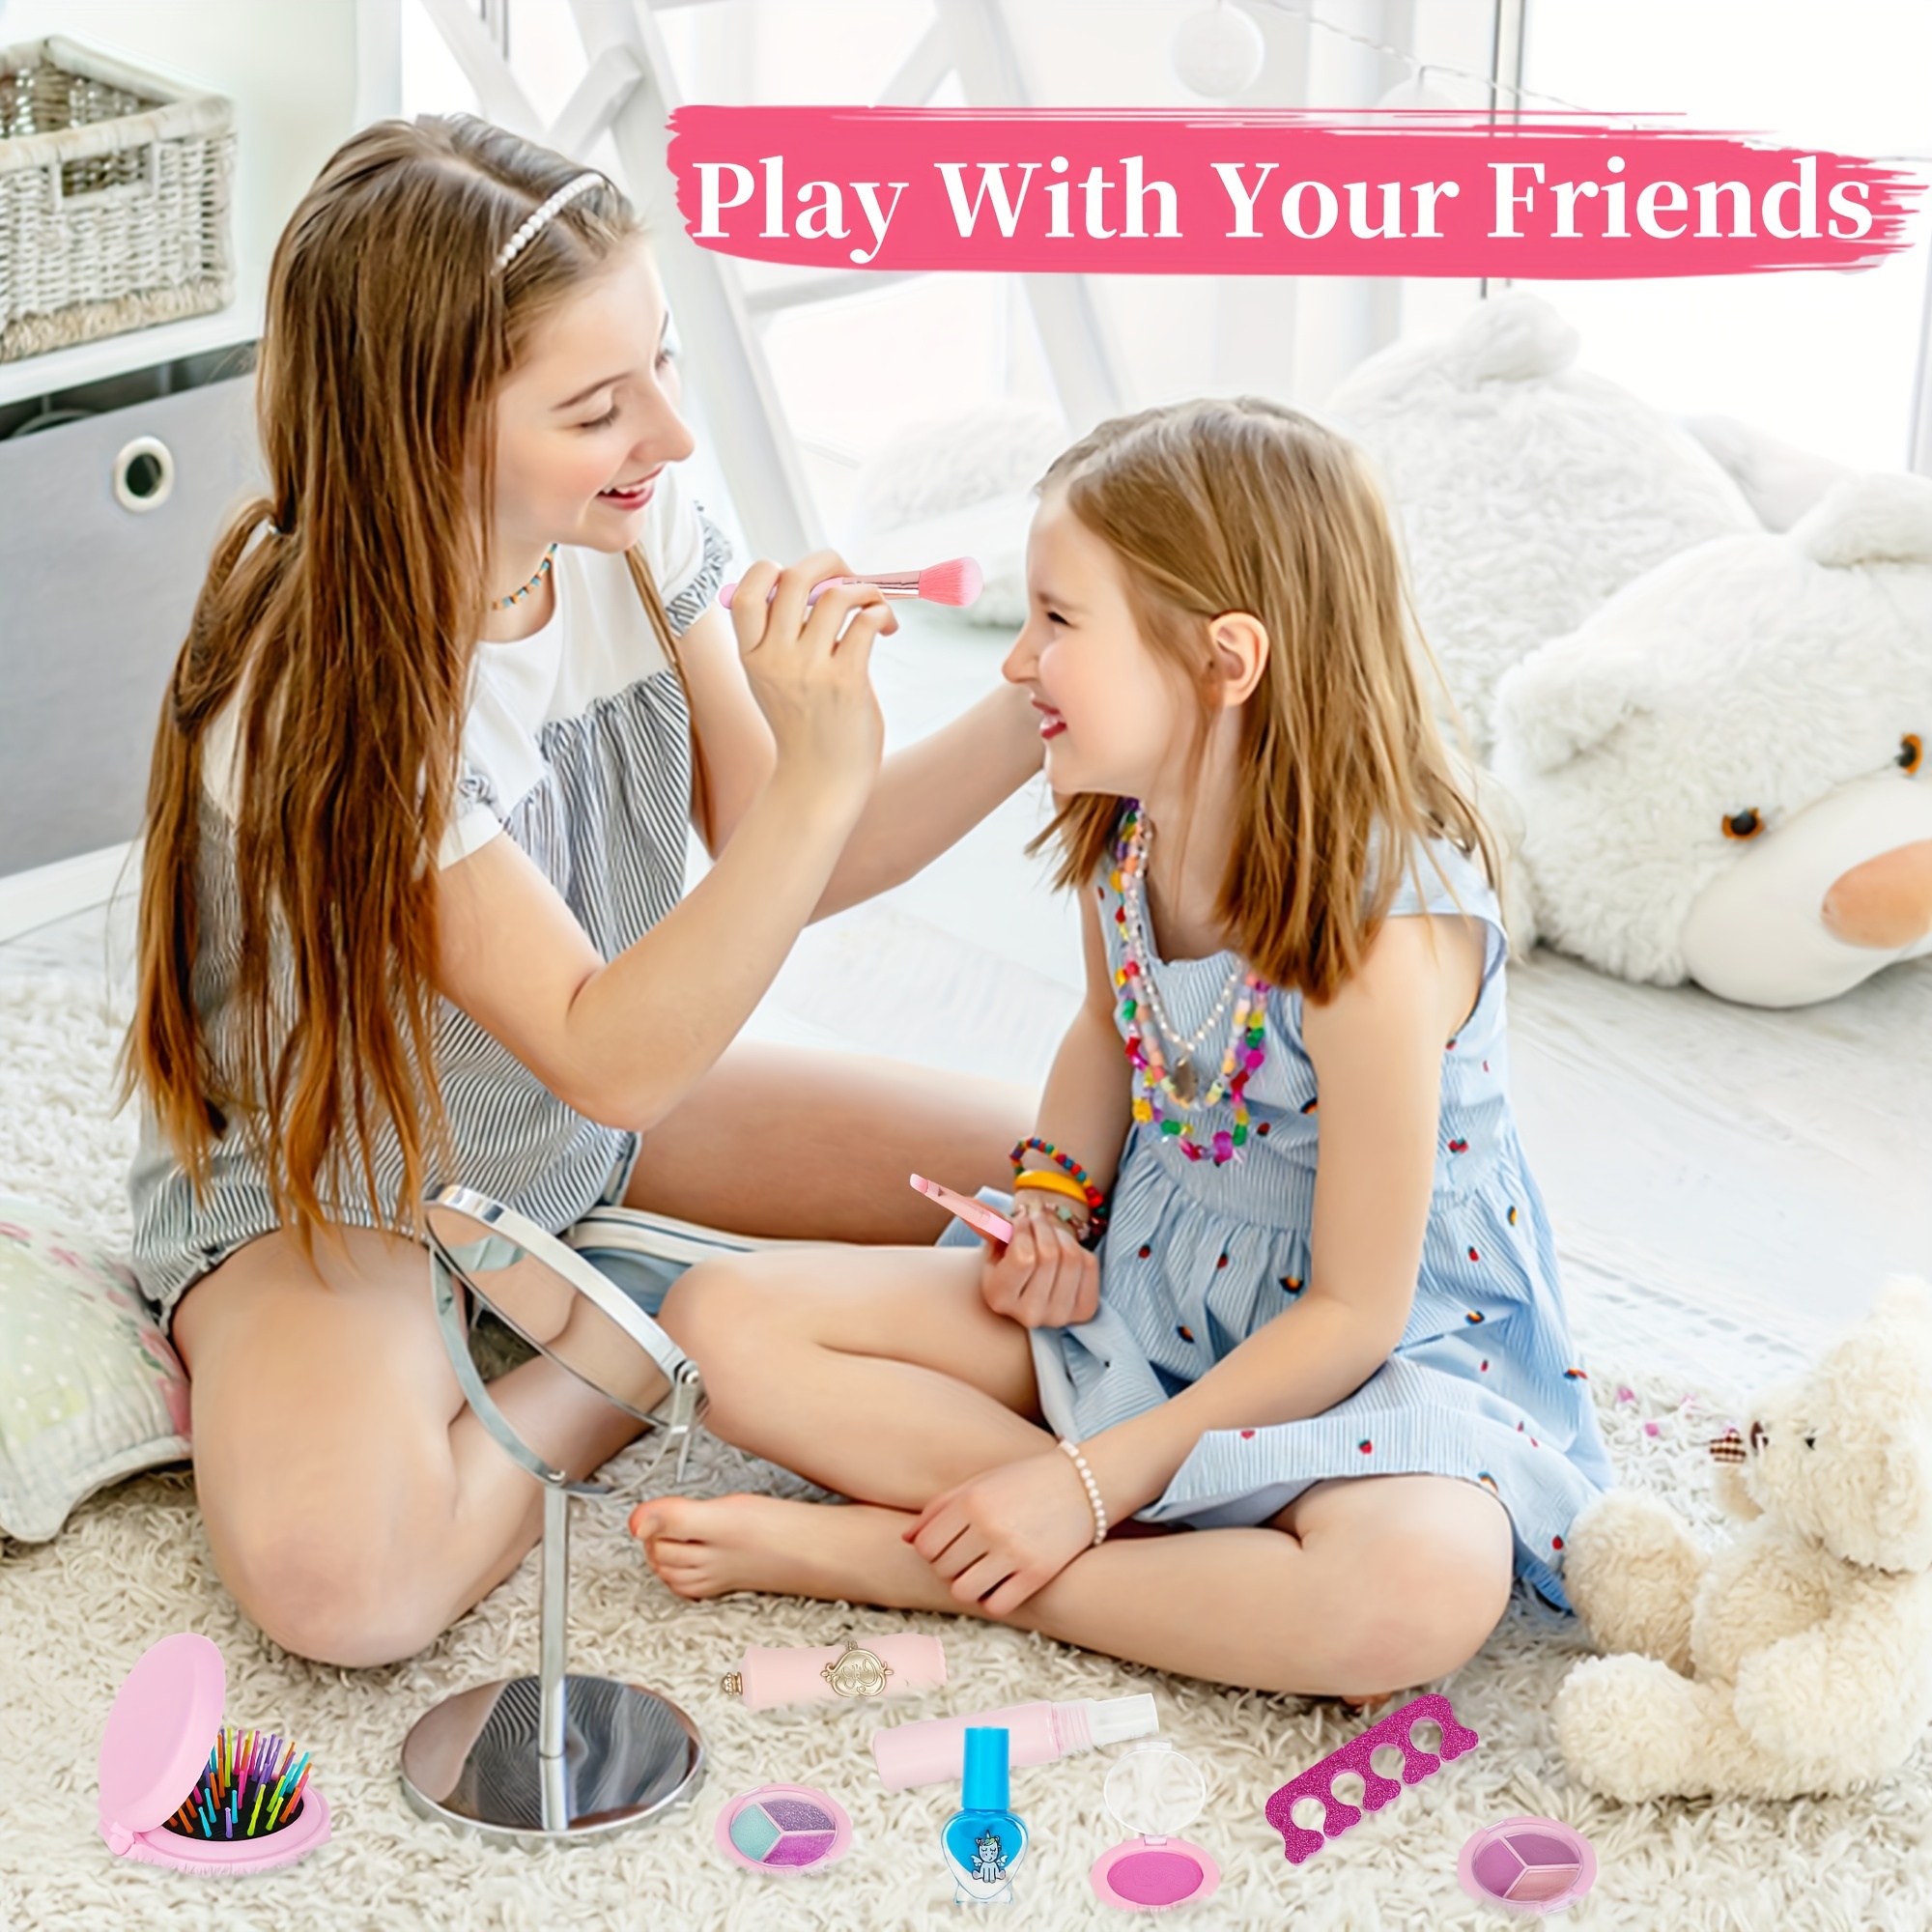 Kids Makeup Kit Girl Toys - Washable Real Kids Makeup Sets for Girl, Girls  Makeup Set Kids Toys for Little Girls Toddler